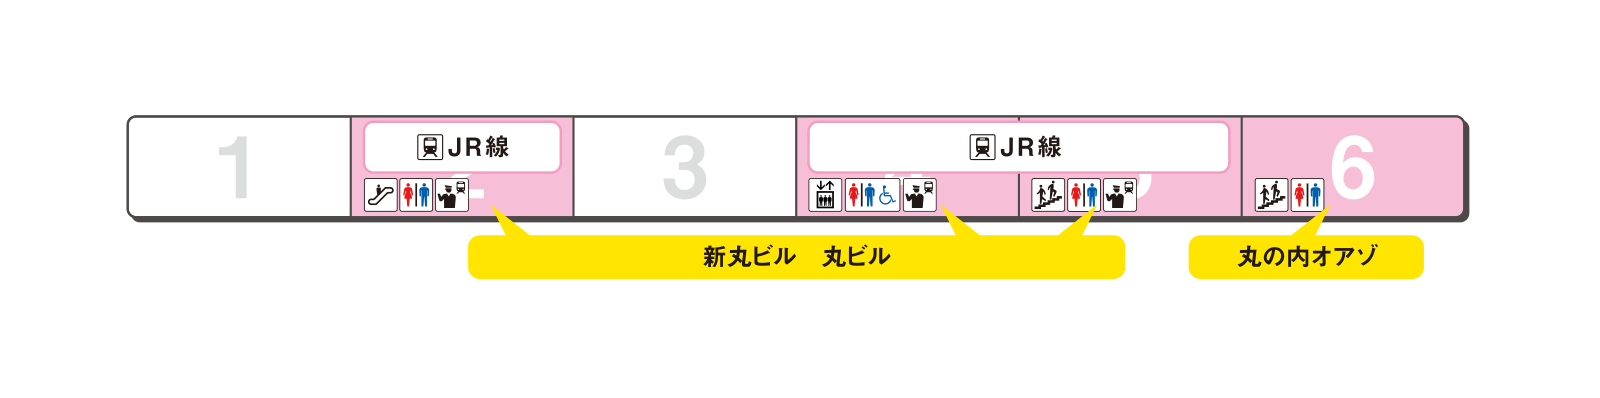 Platform exit guidance